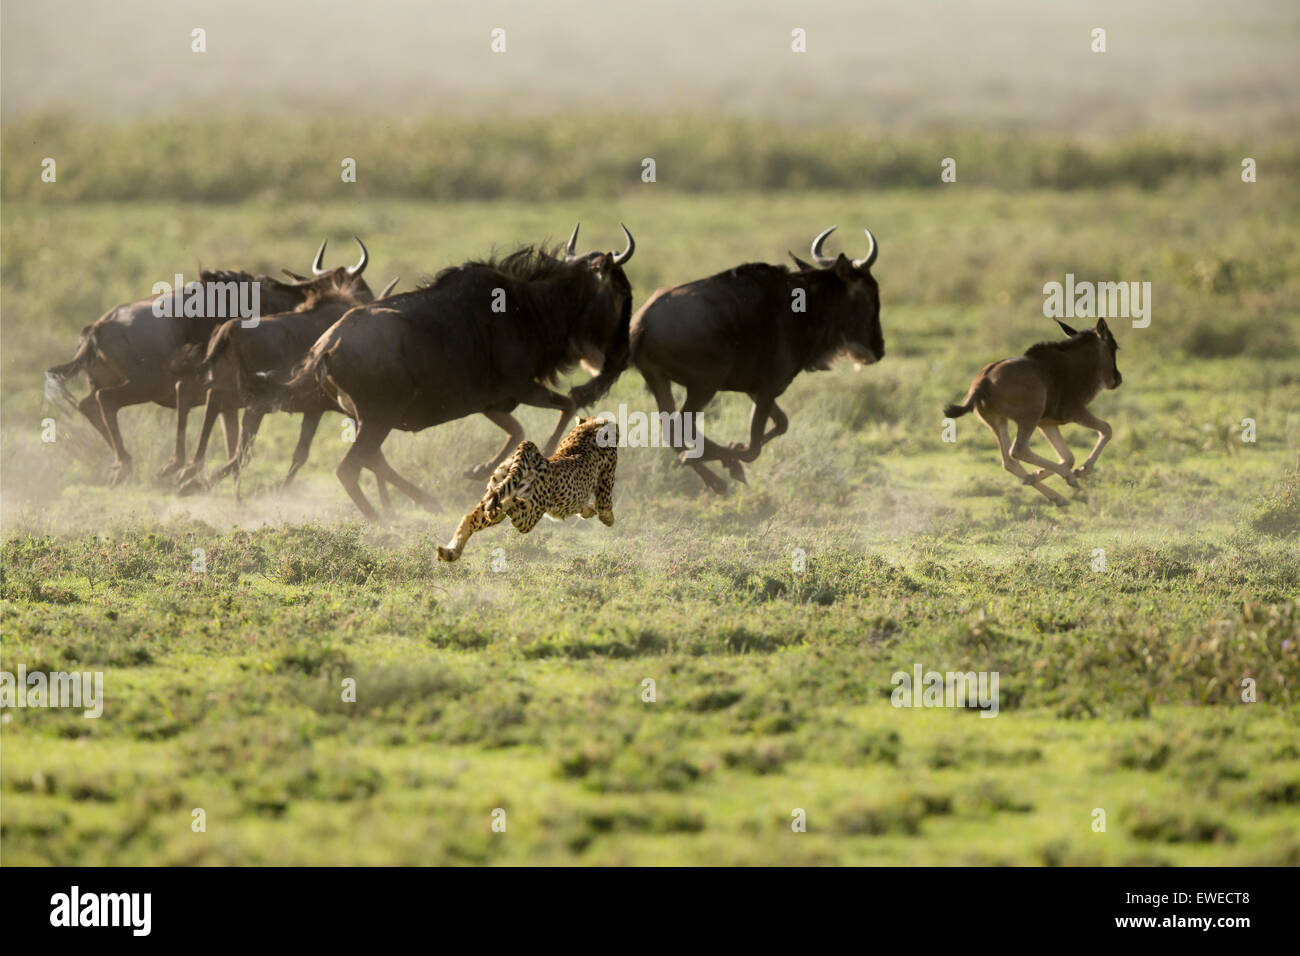 A Cheetah (Acinonyx jubatus) chases wildebeest prey in the Ndutu Plain in Tanzania Stock Photo